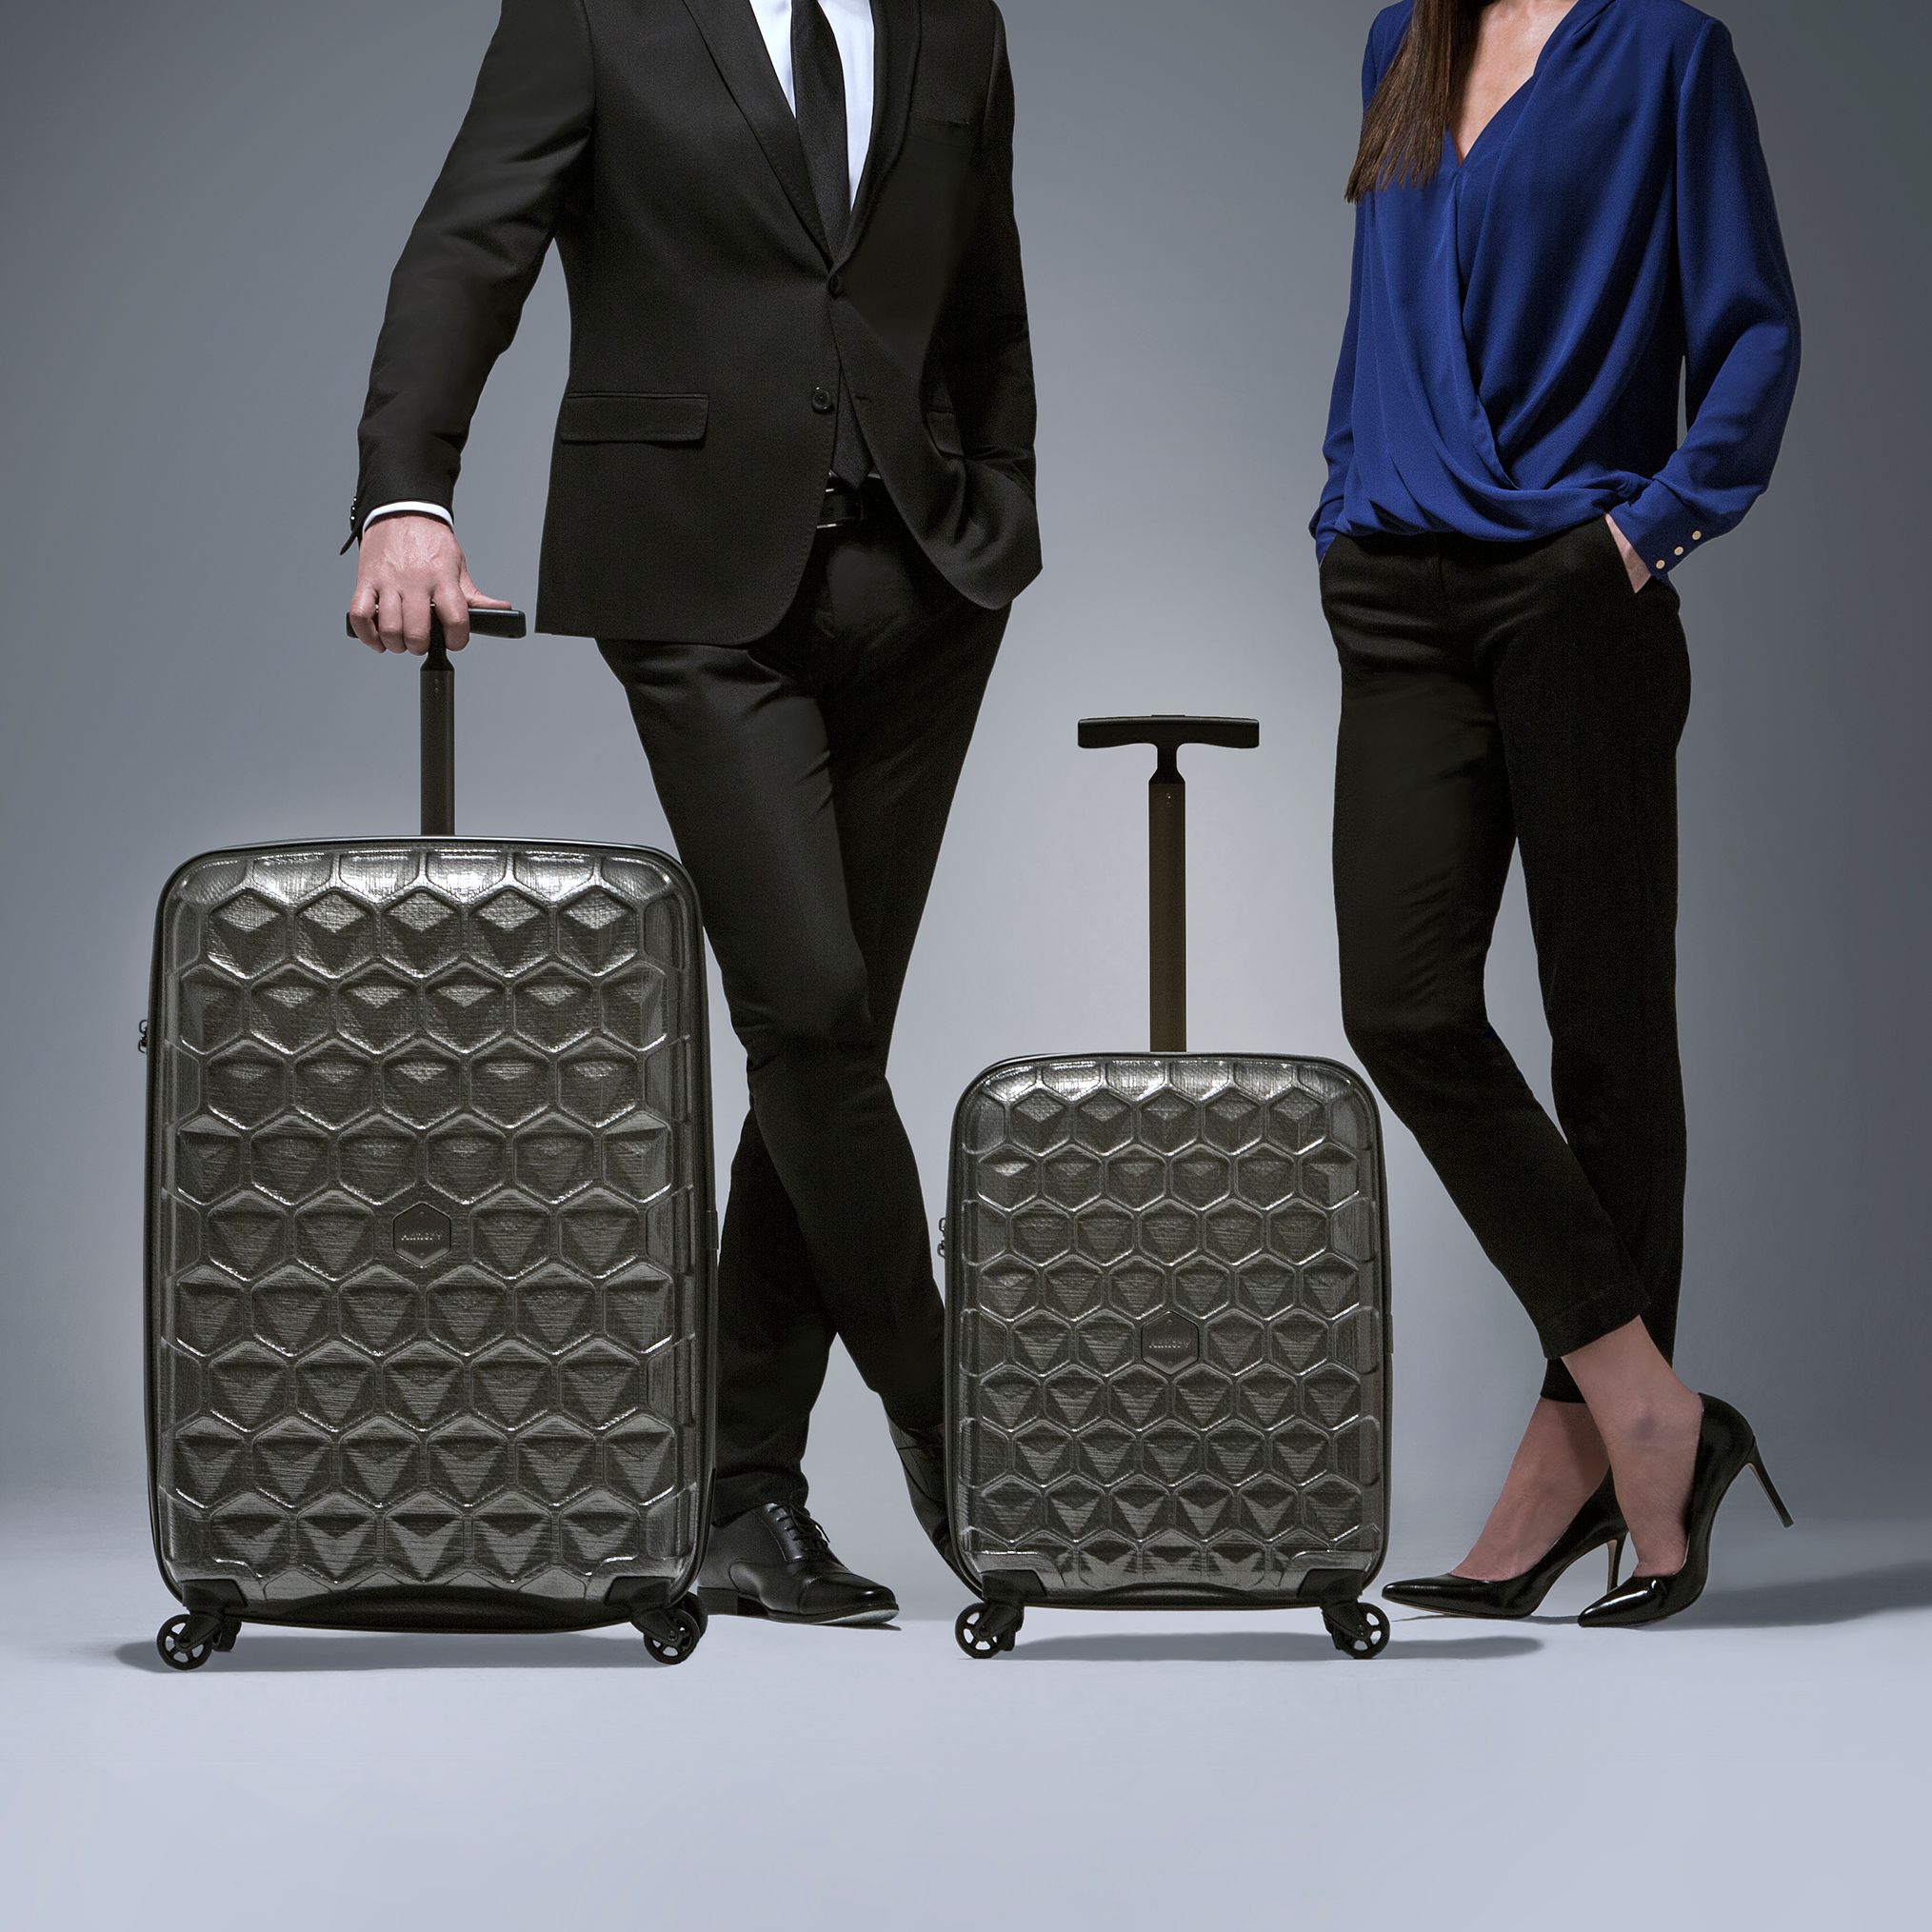 「suitcase　fashion」の画像検索結果